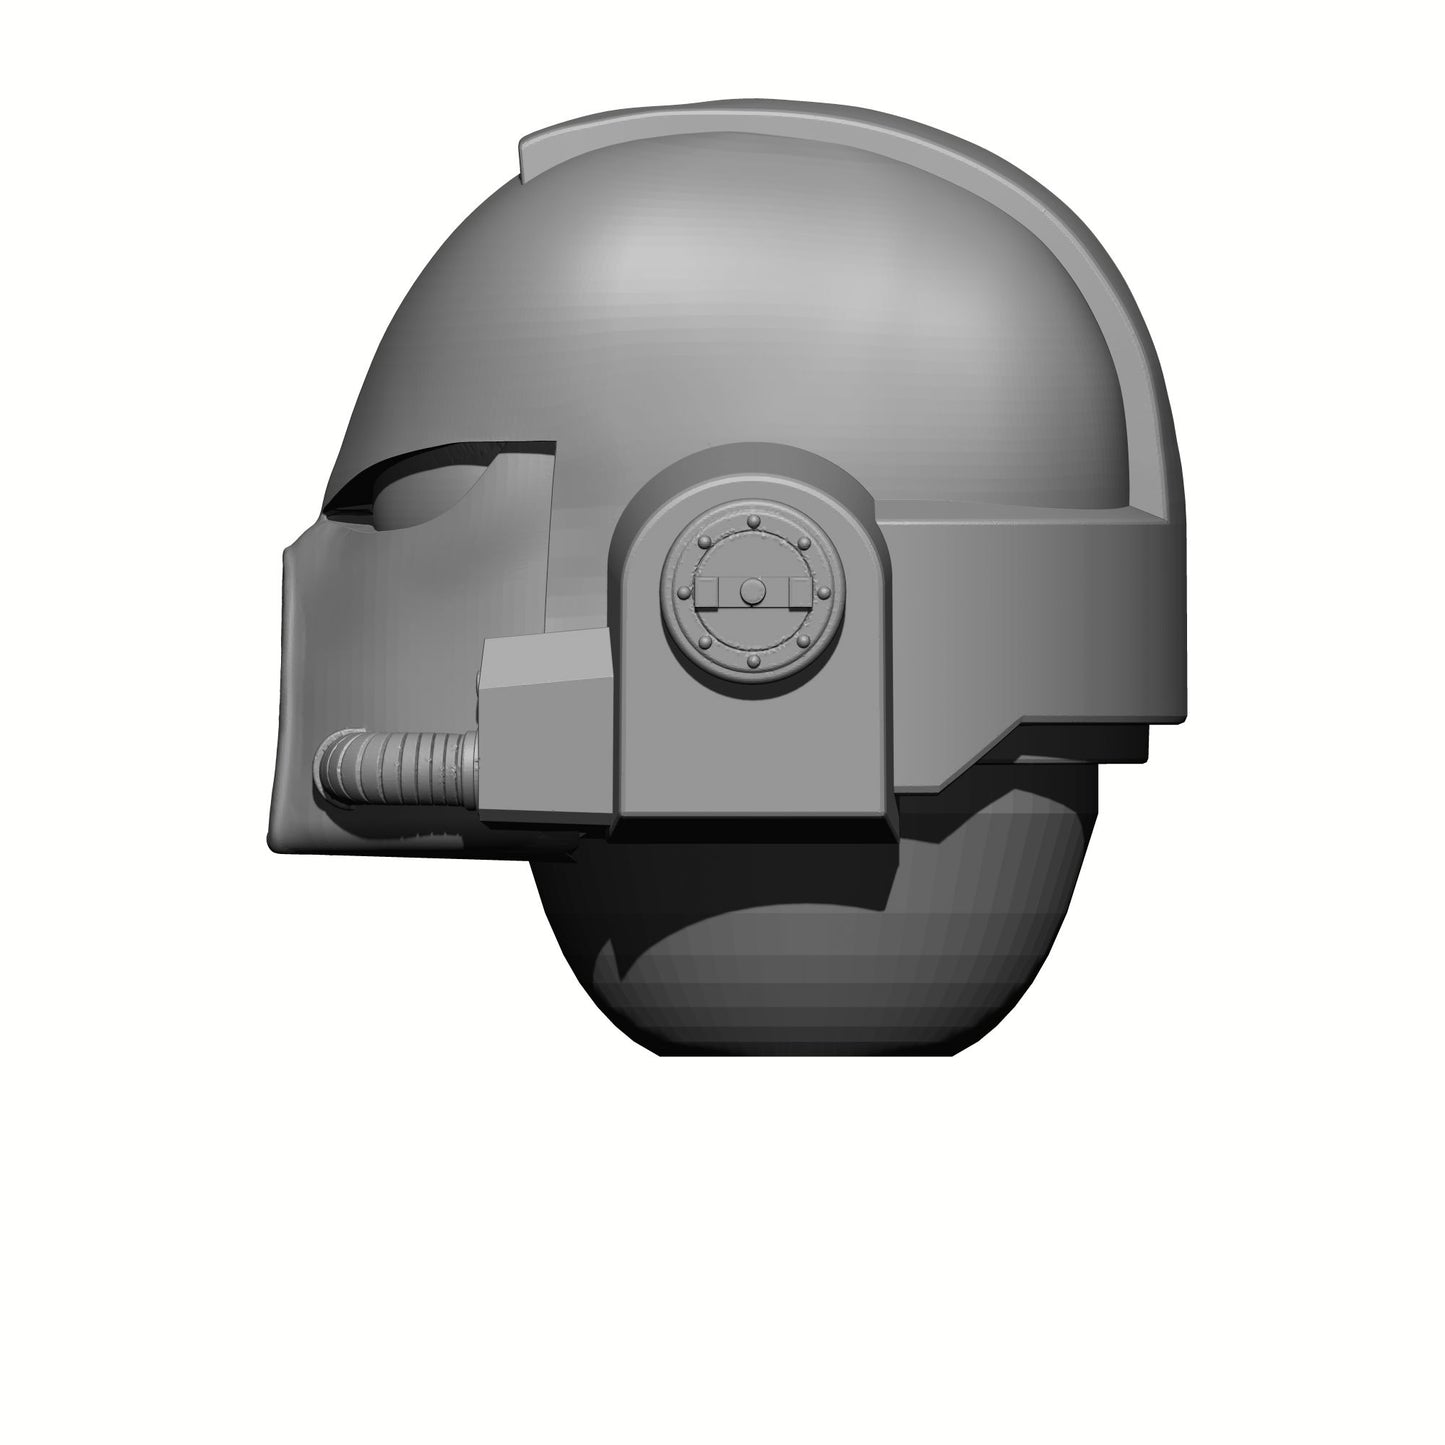 MK VII Helmet: Helmet Swap for JoyToy Warhammer 40K Compatible Space Marine 1:18 4" Action Figures